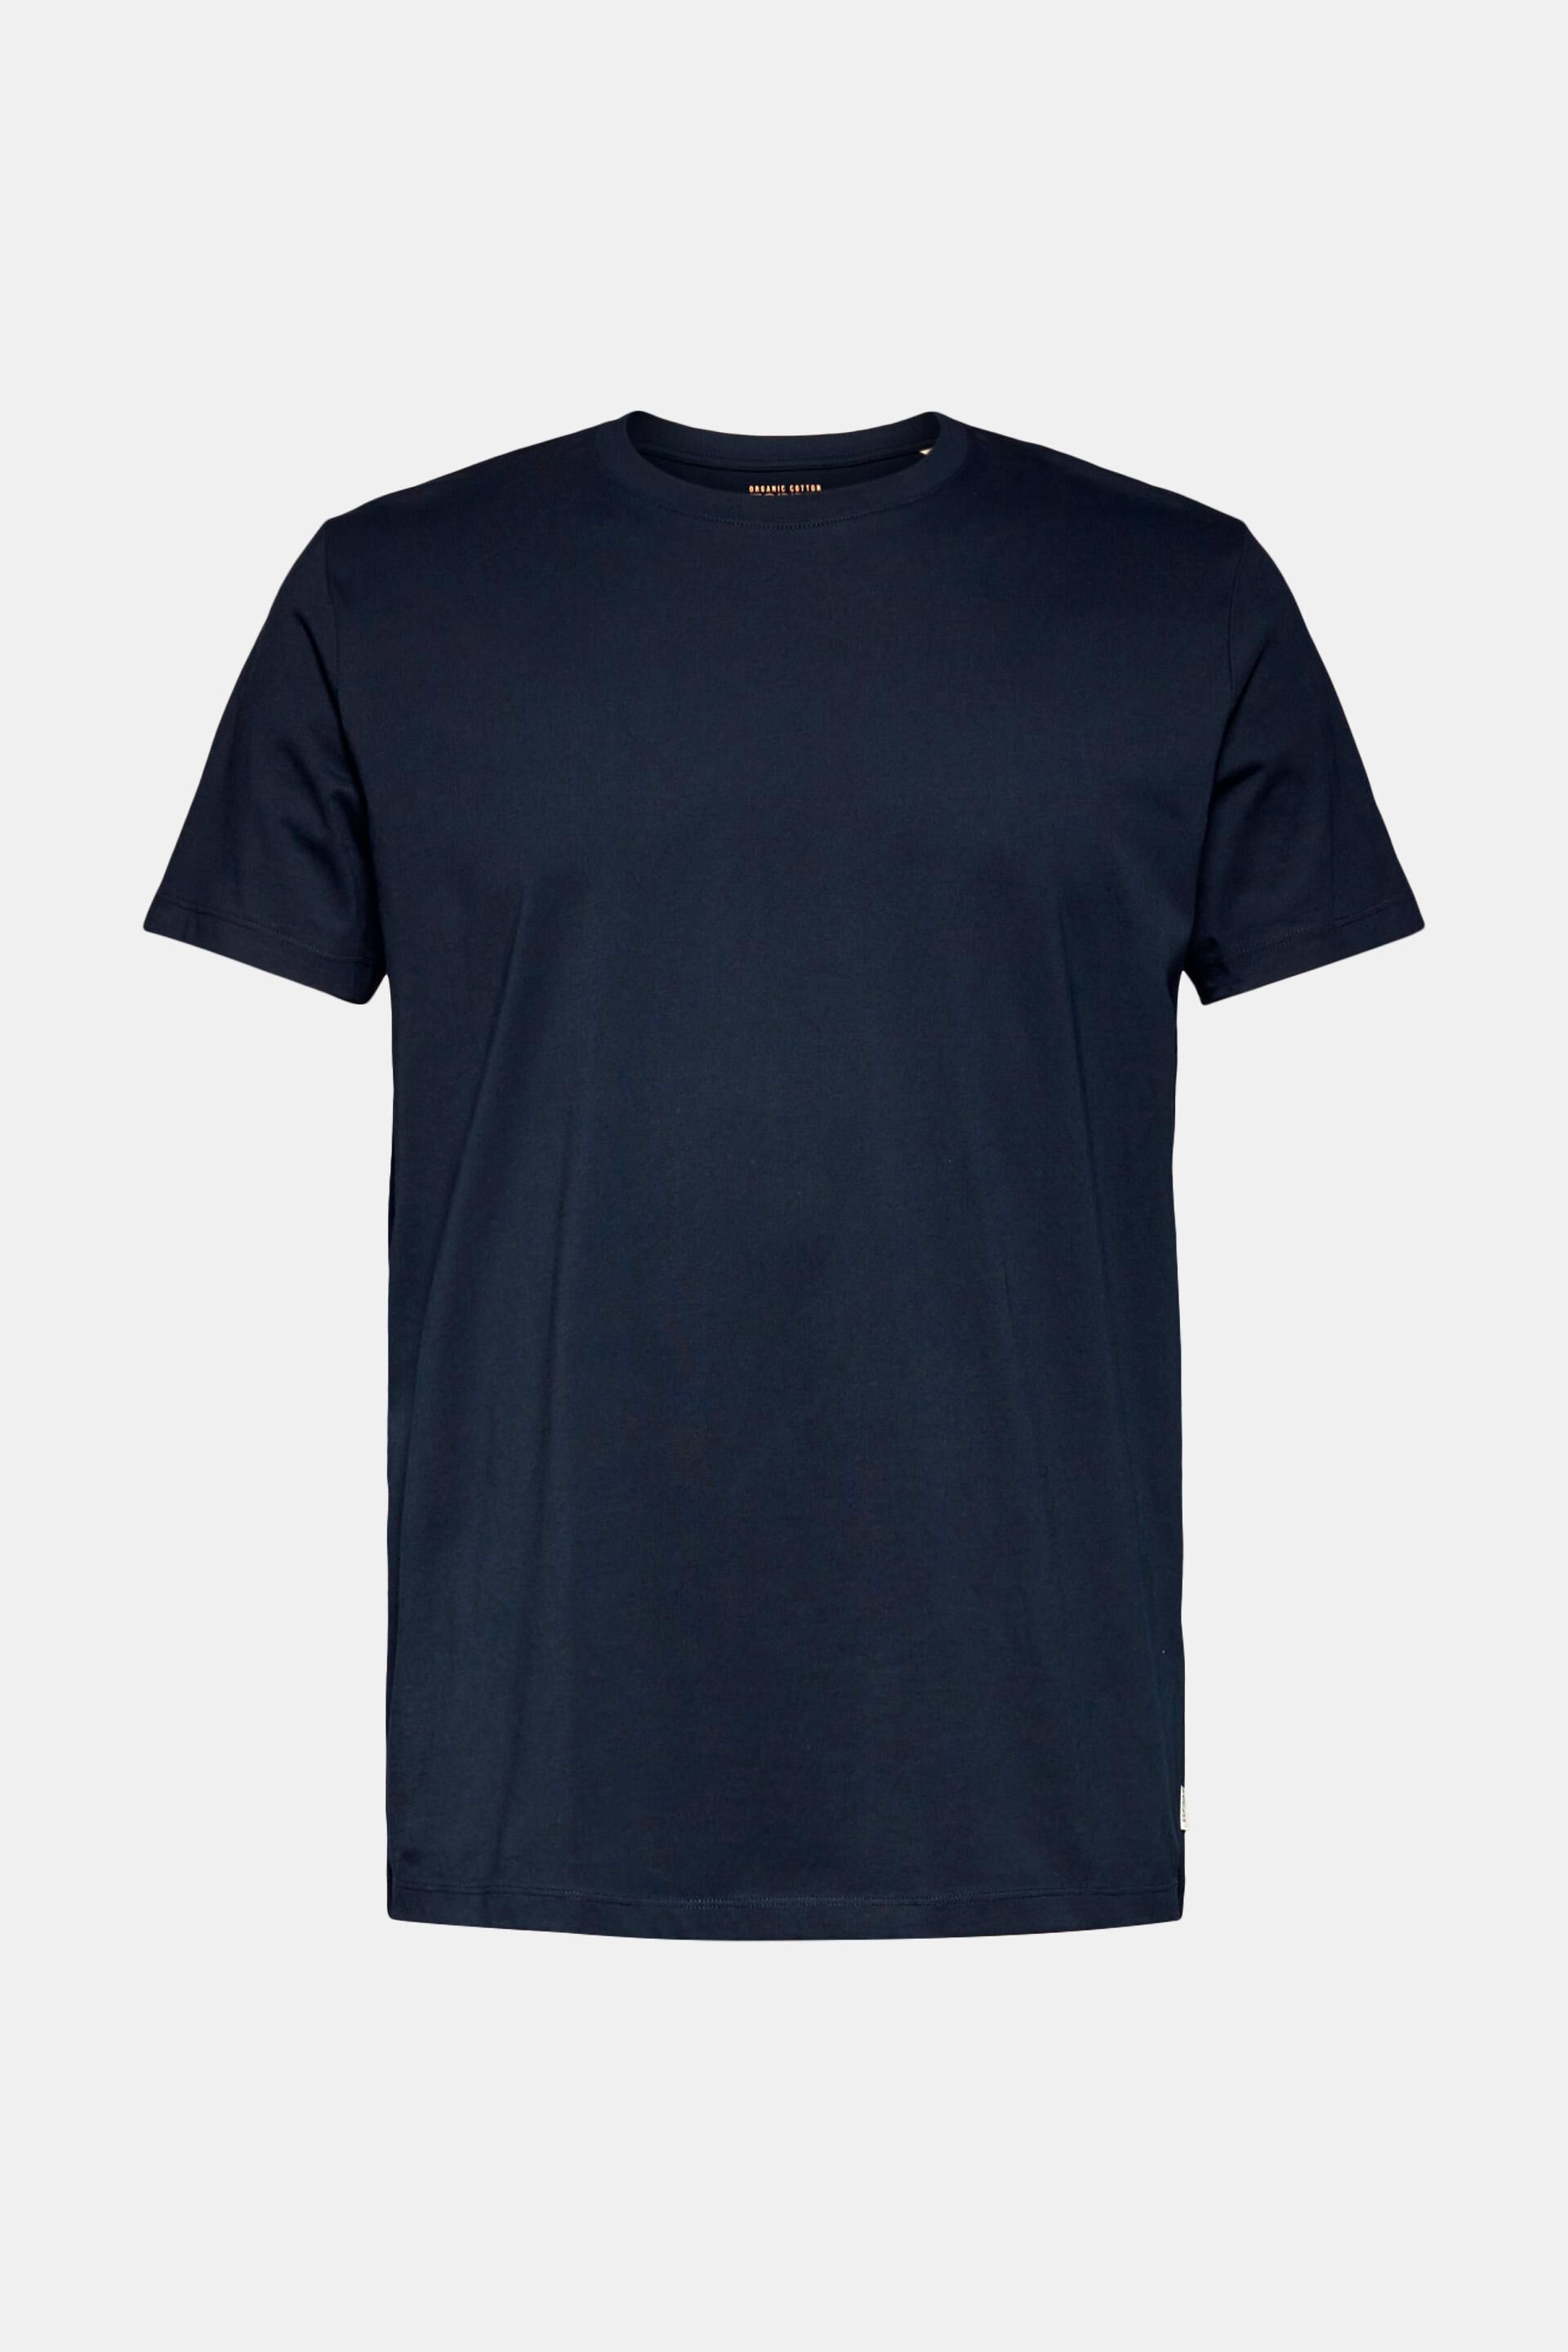 Zara T-shirt MODA DONNA Camicie & T-shirt T-shirt Stampato Blu navy/Giallo L sconto 50% 